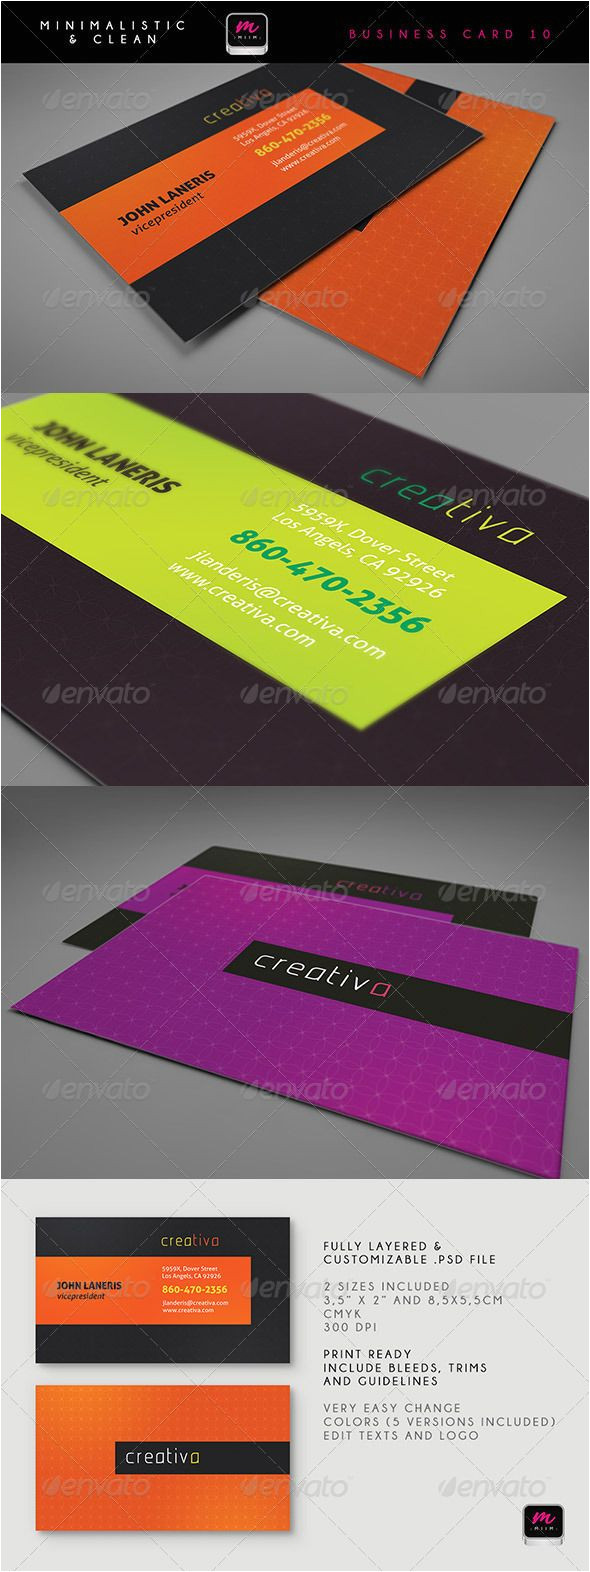 0dc63247c6730a2ea1e8ed59929cc35c business card templates business cards jpg